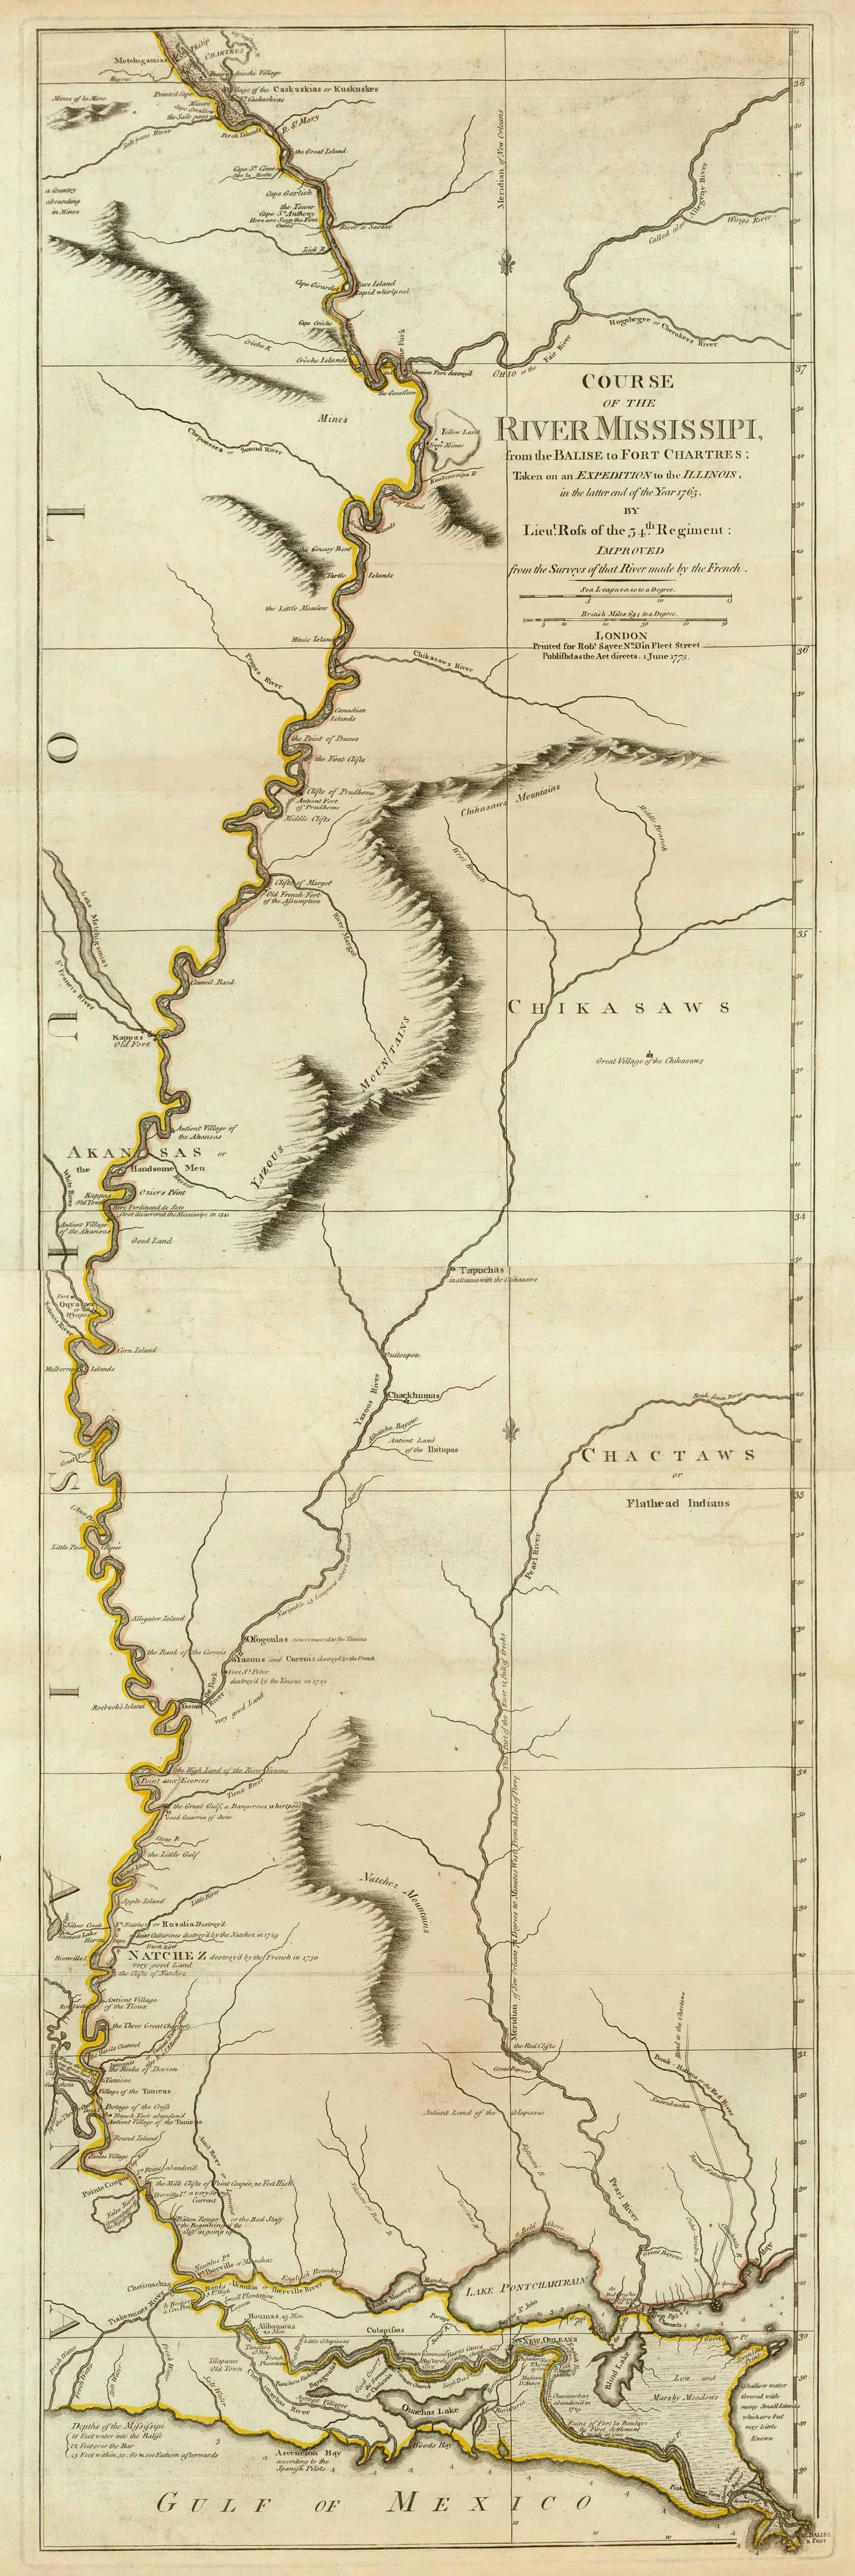 Louisiana, History, Map, Population, Cities, & Facts